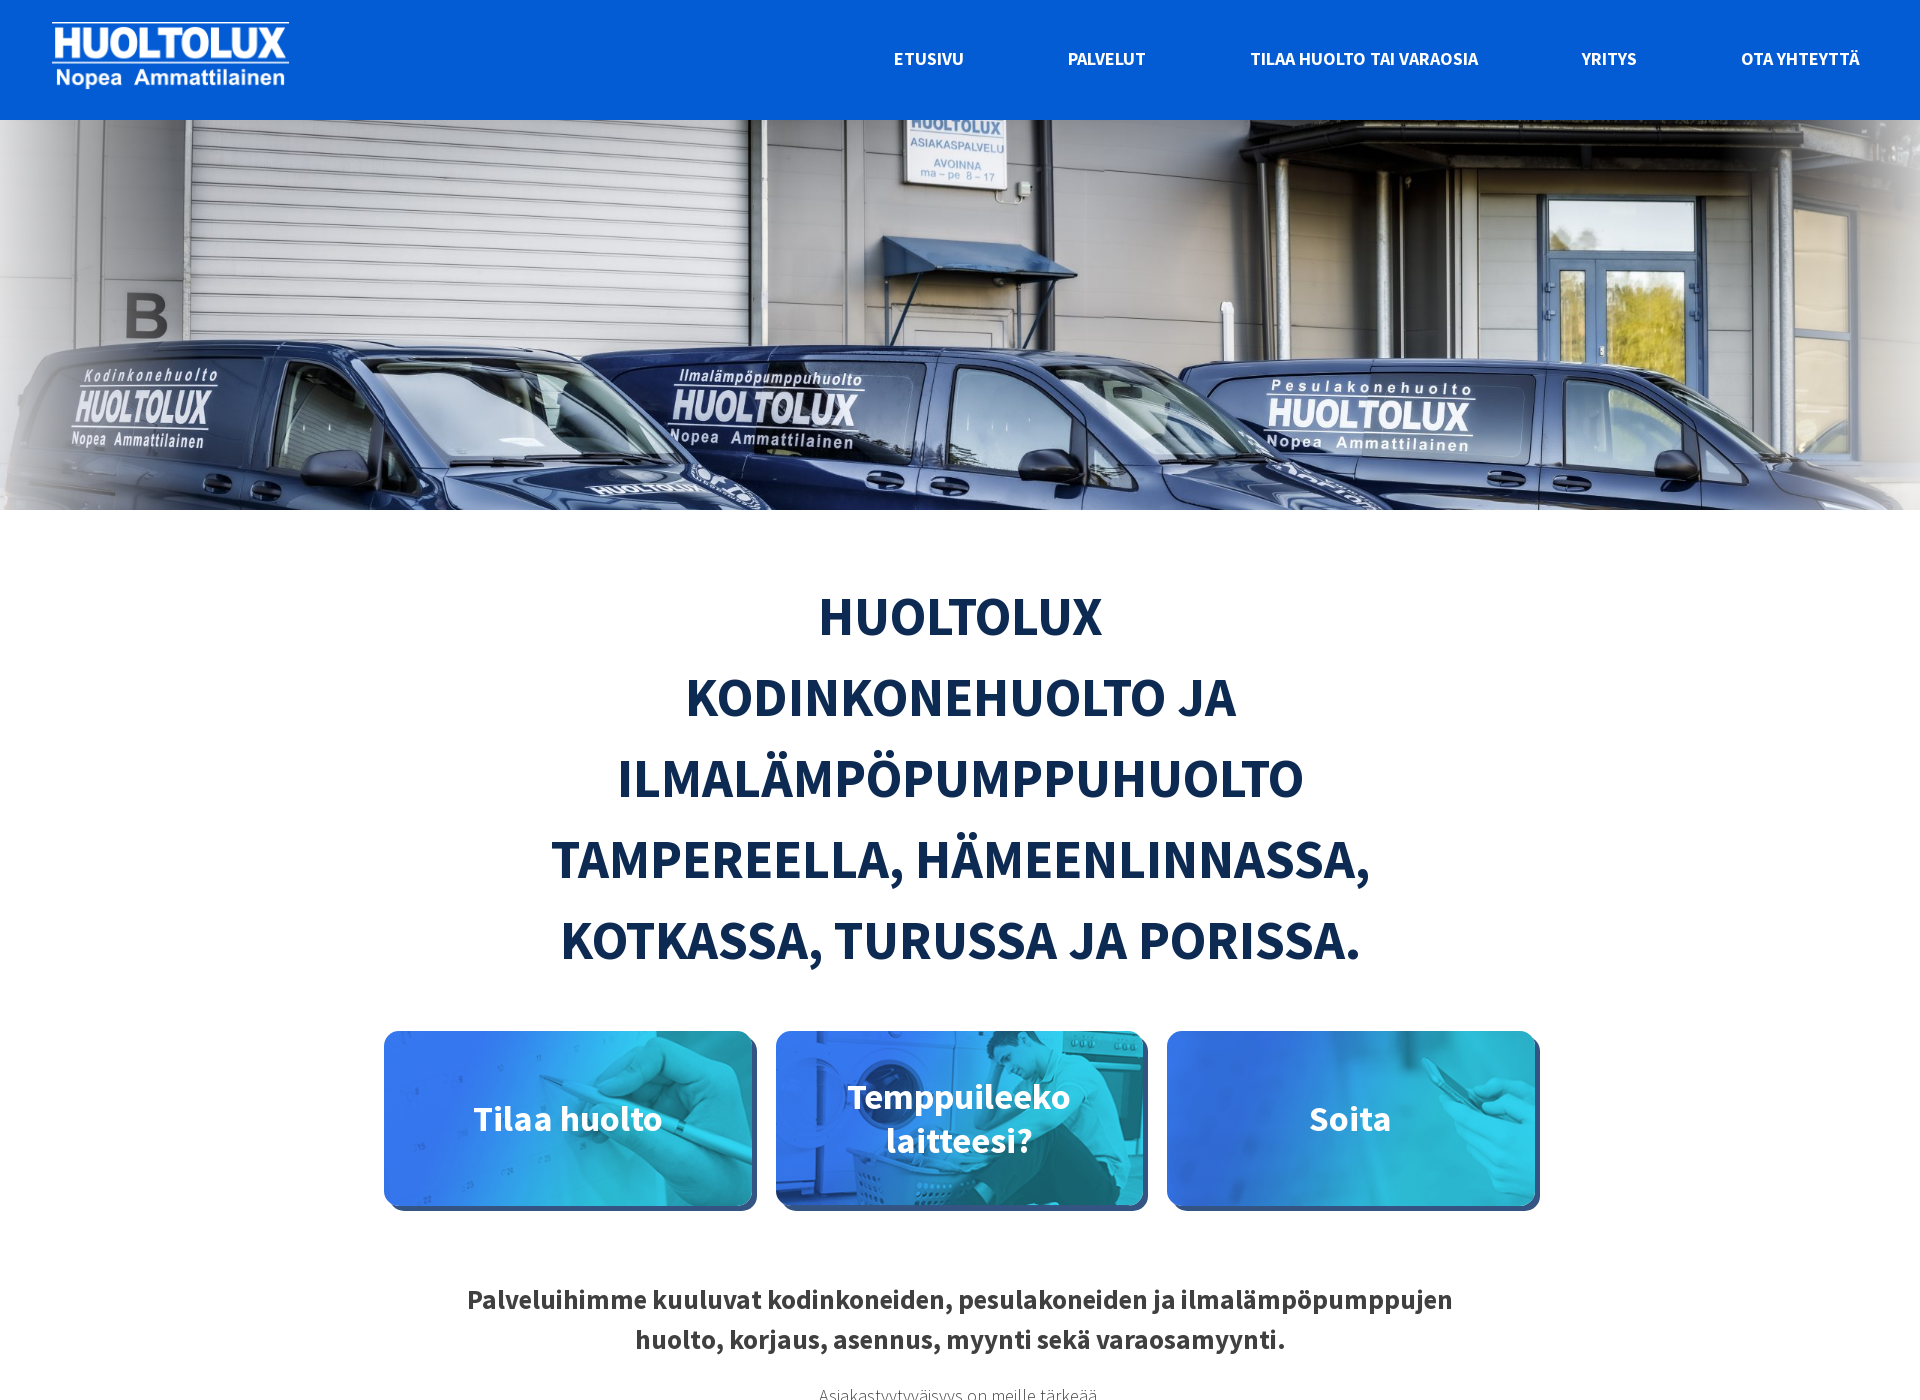 Näyttökuva huoltolux.fi